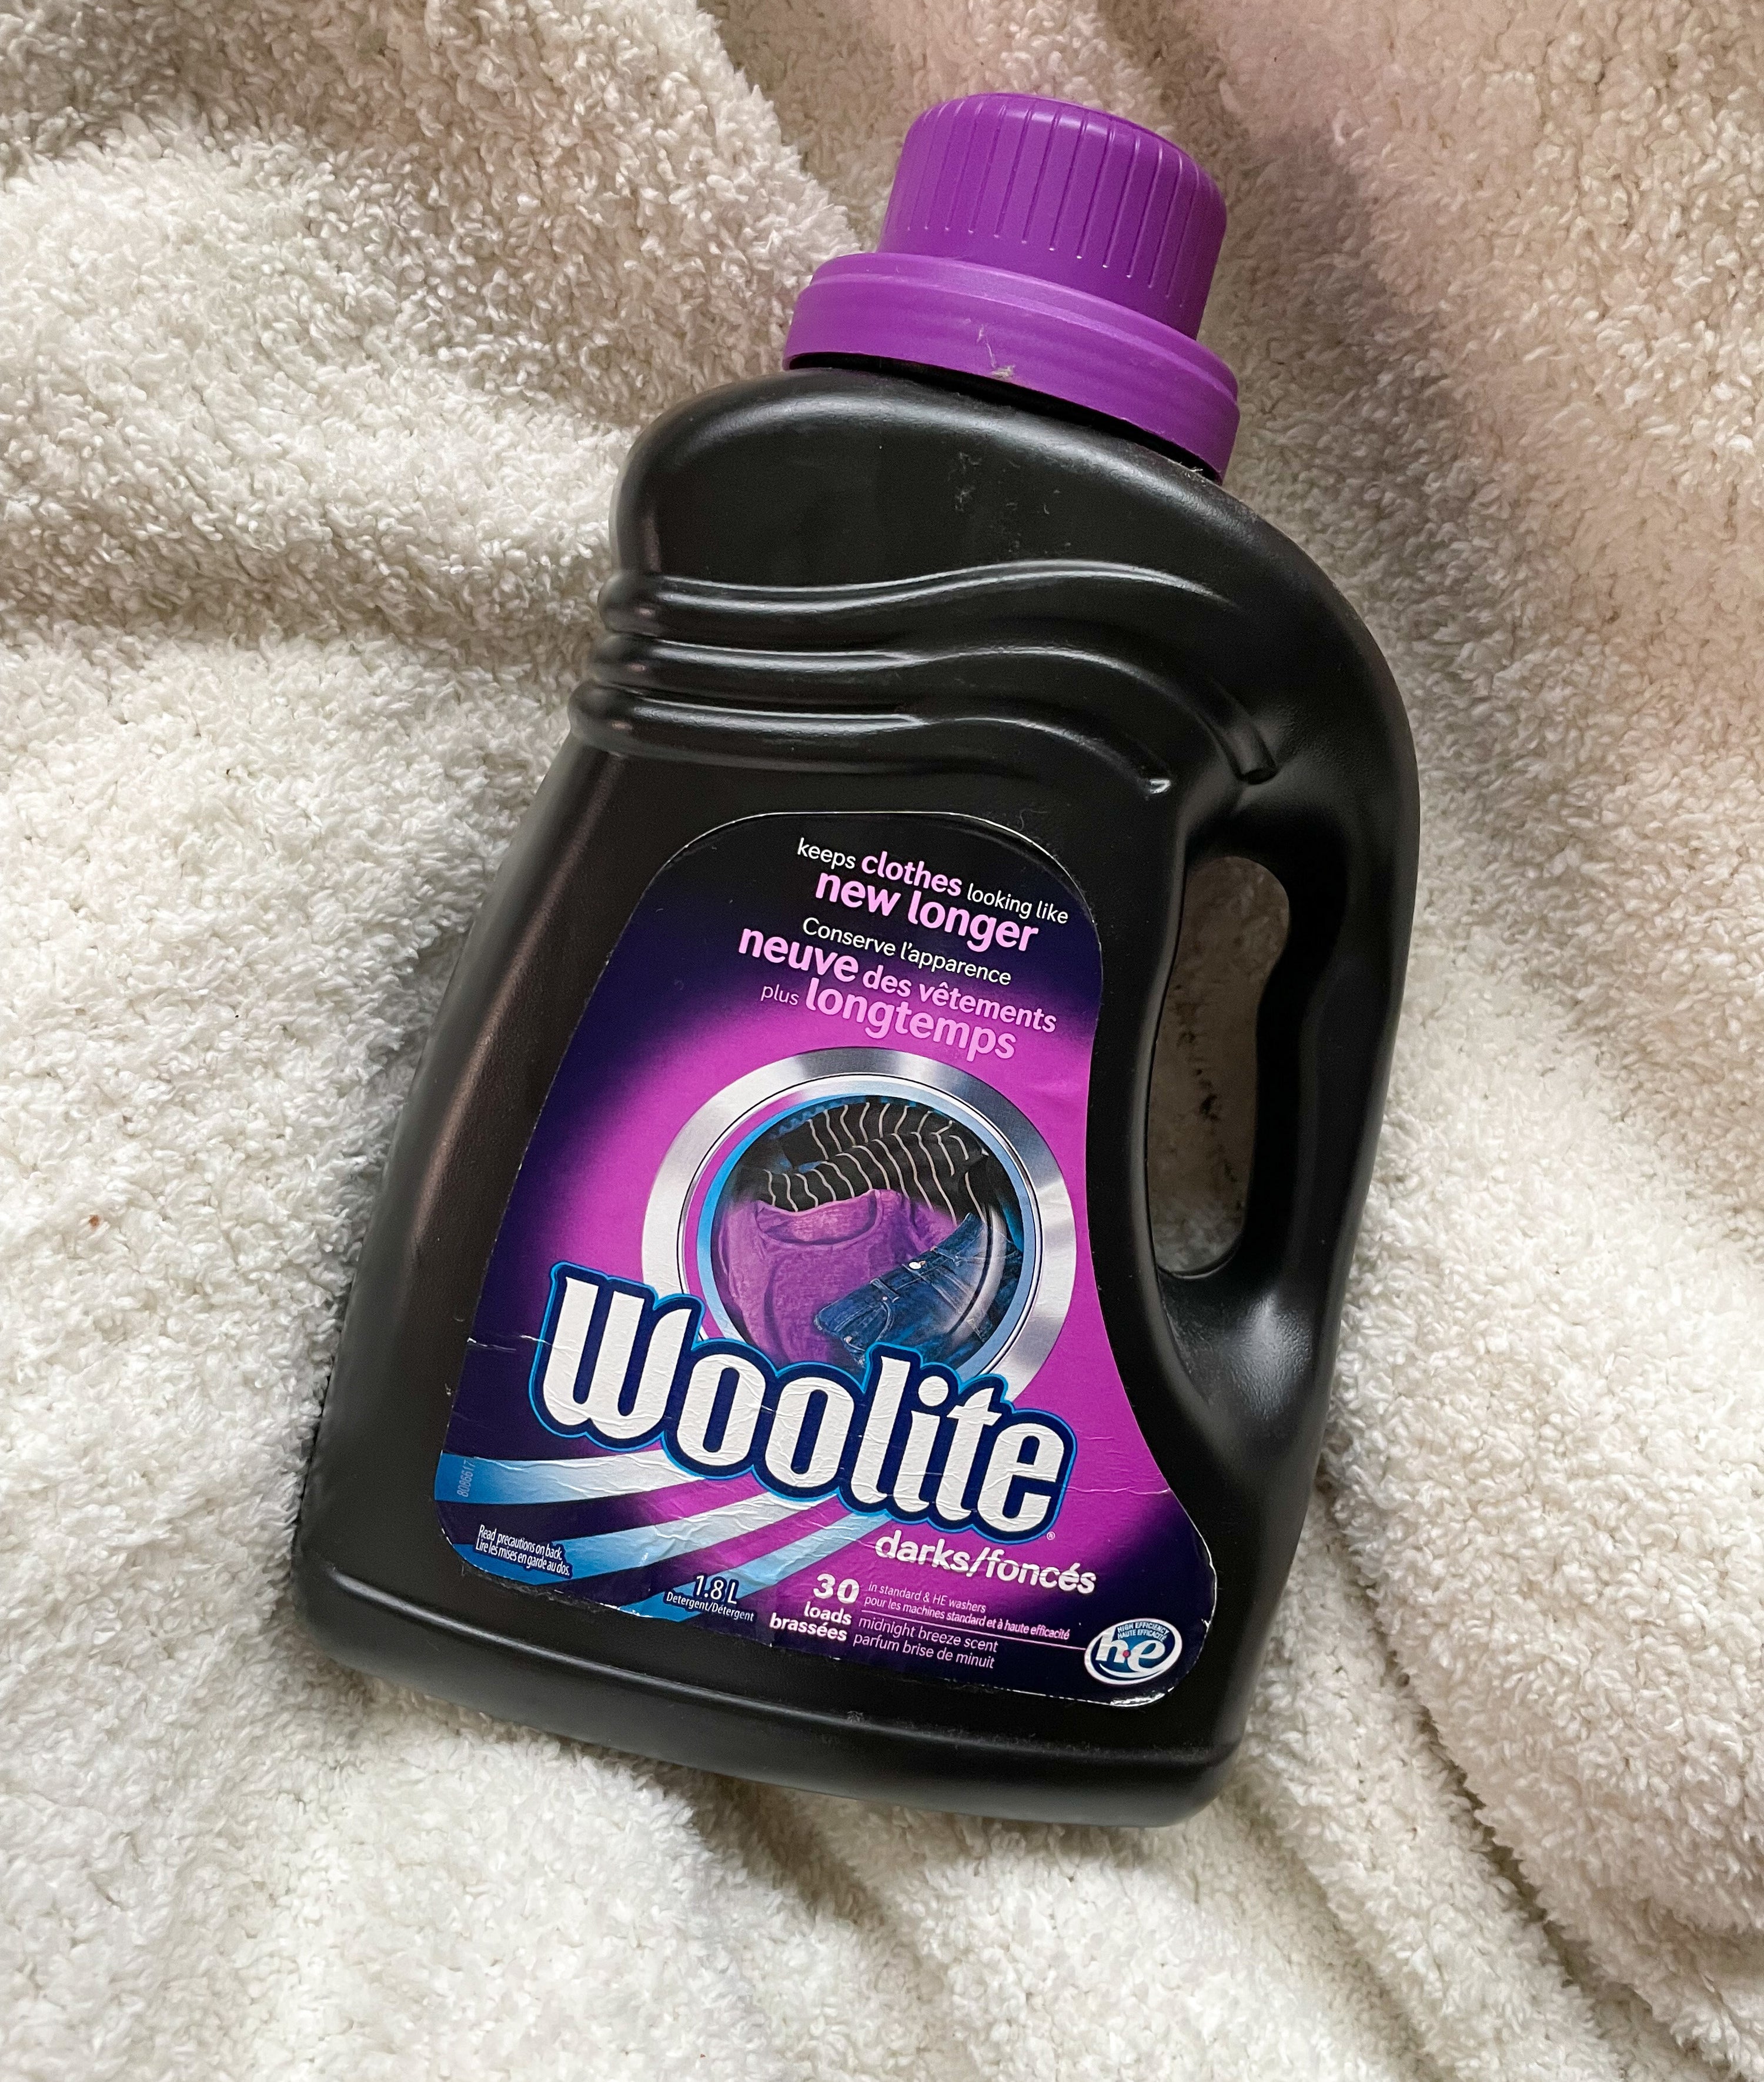 a bottle of woolite detergent on a fluffy blanket